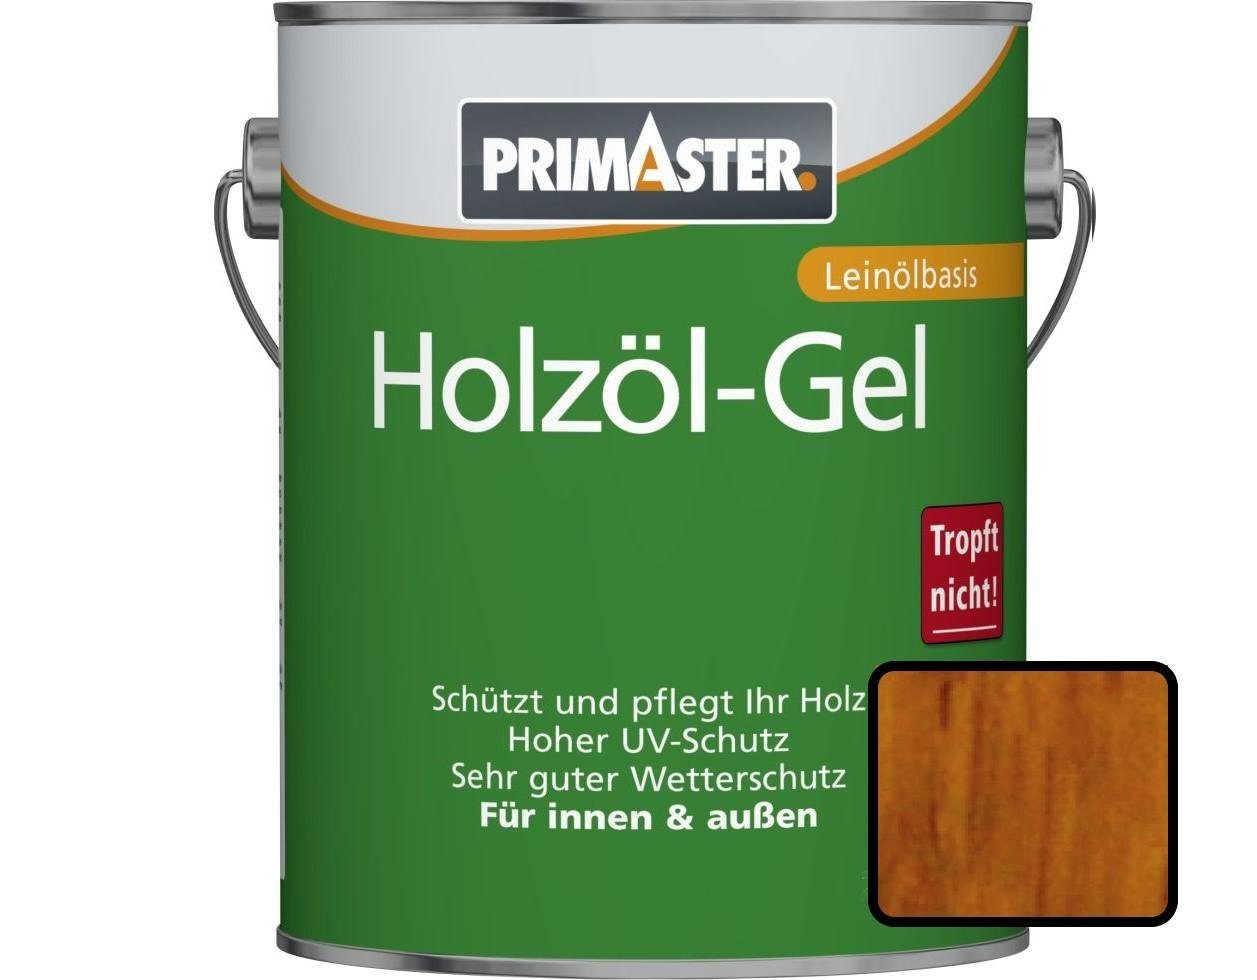 Primaster Hartholzöl Primaster Holzöl-Gel 2,5 L eiche | Holzöle